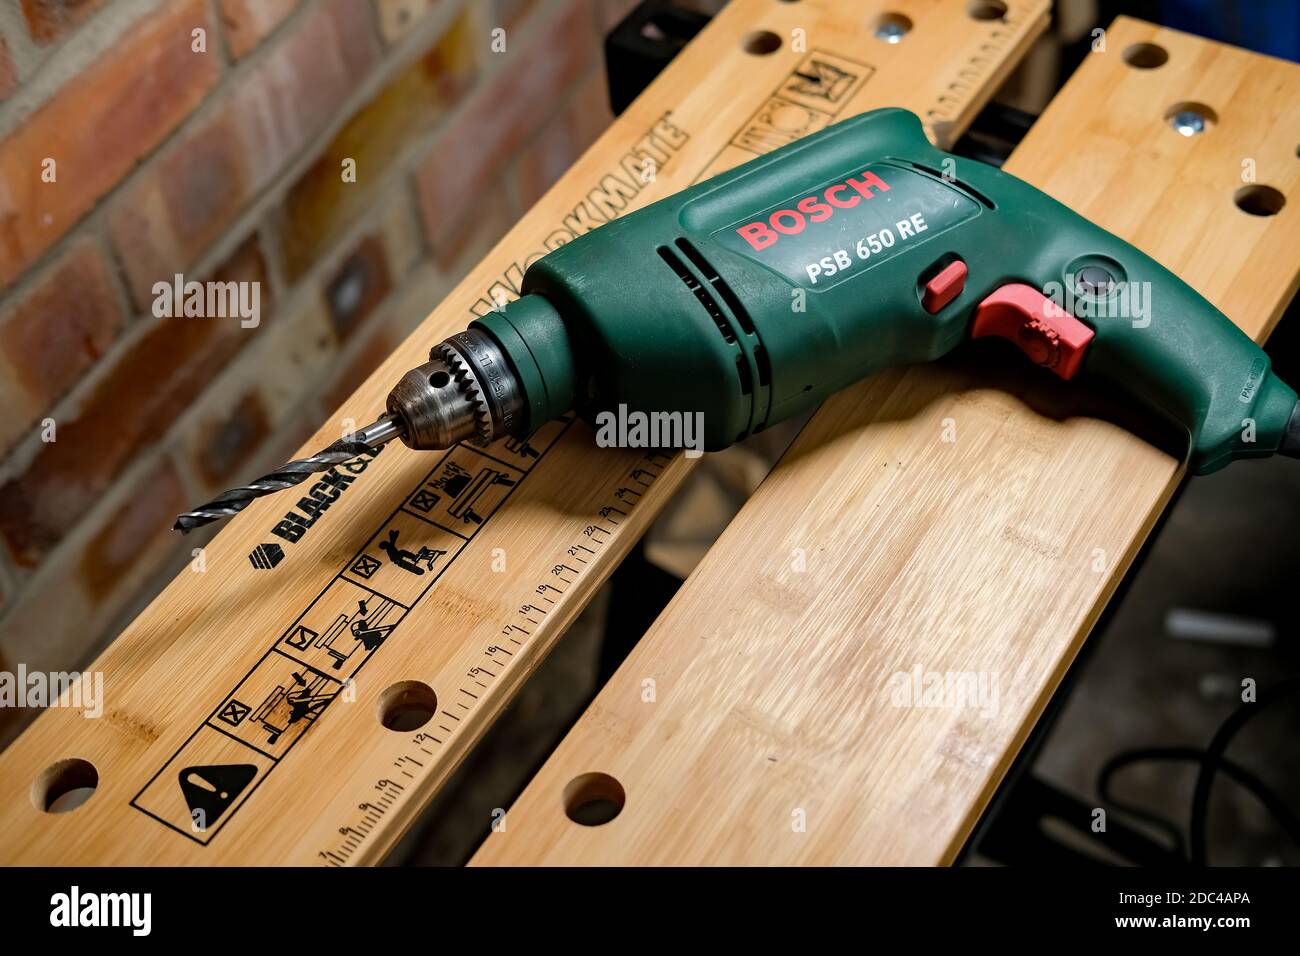 https://c8.alamy.com/comp/2DC4APA/norwich-norfolk-uk-november-17-2020-an-illustrative-photo-of-a-bosch-power-drill-on-a-black-decker-workmate-bench-2DC4APA.jpg